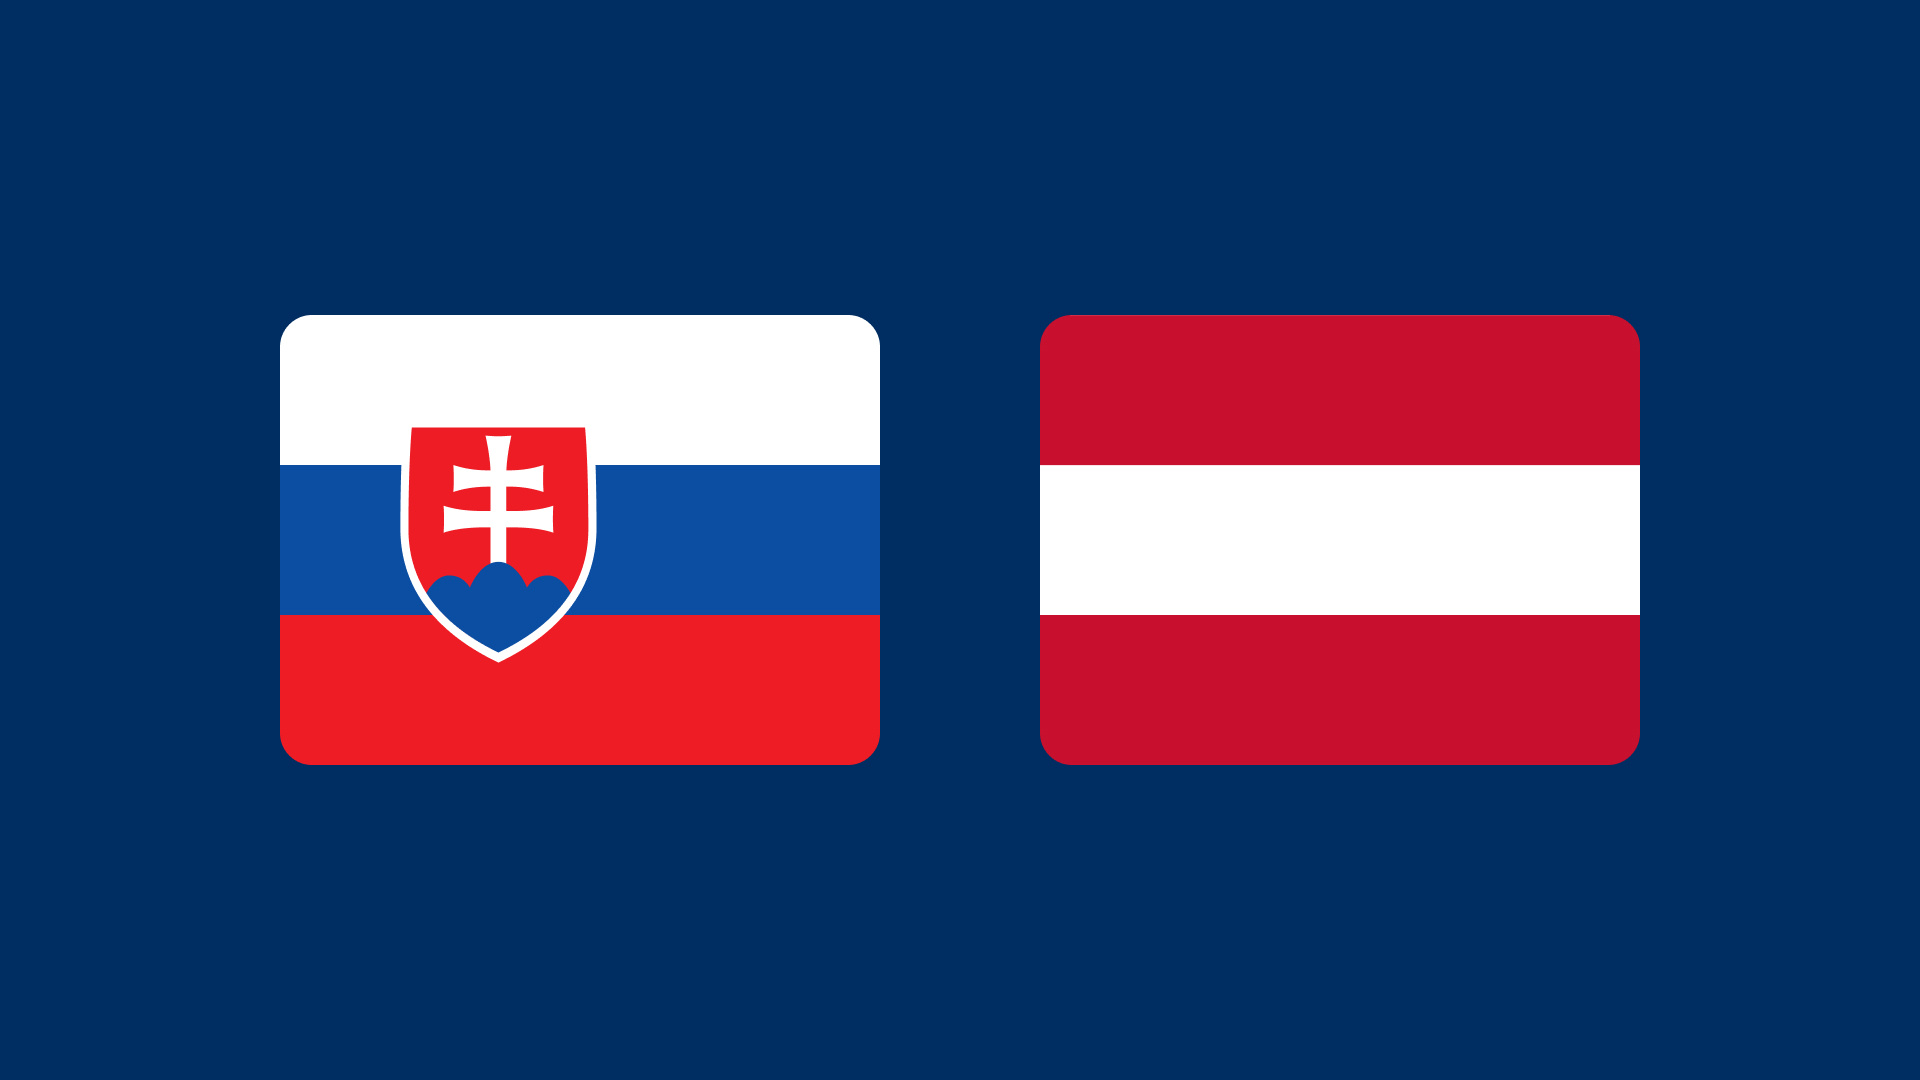 Rakúsko - Slovensko online na webe RTVS